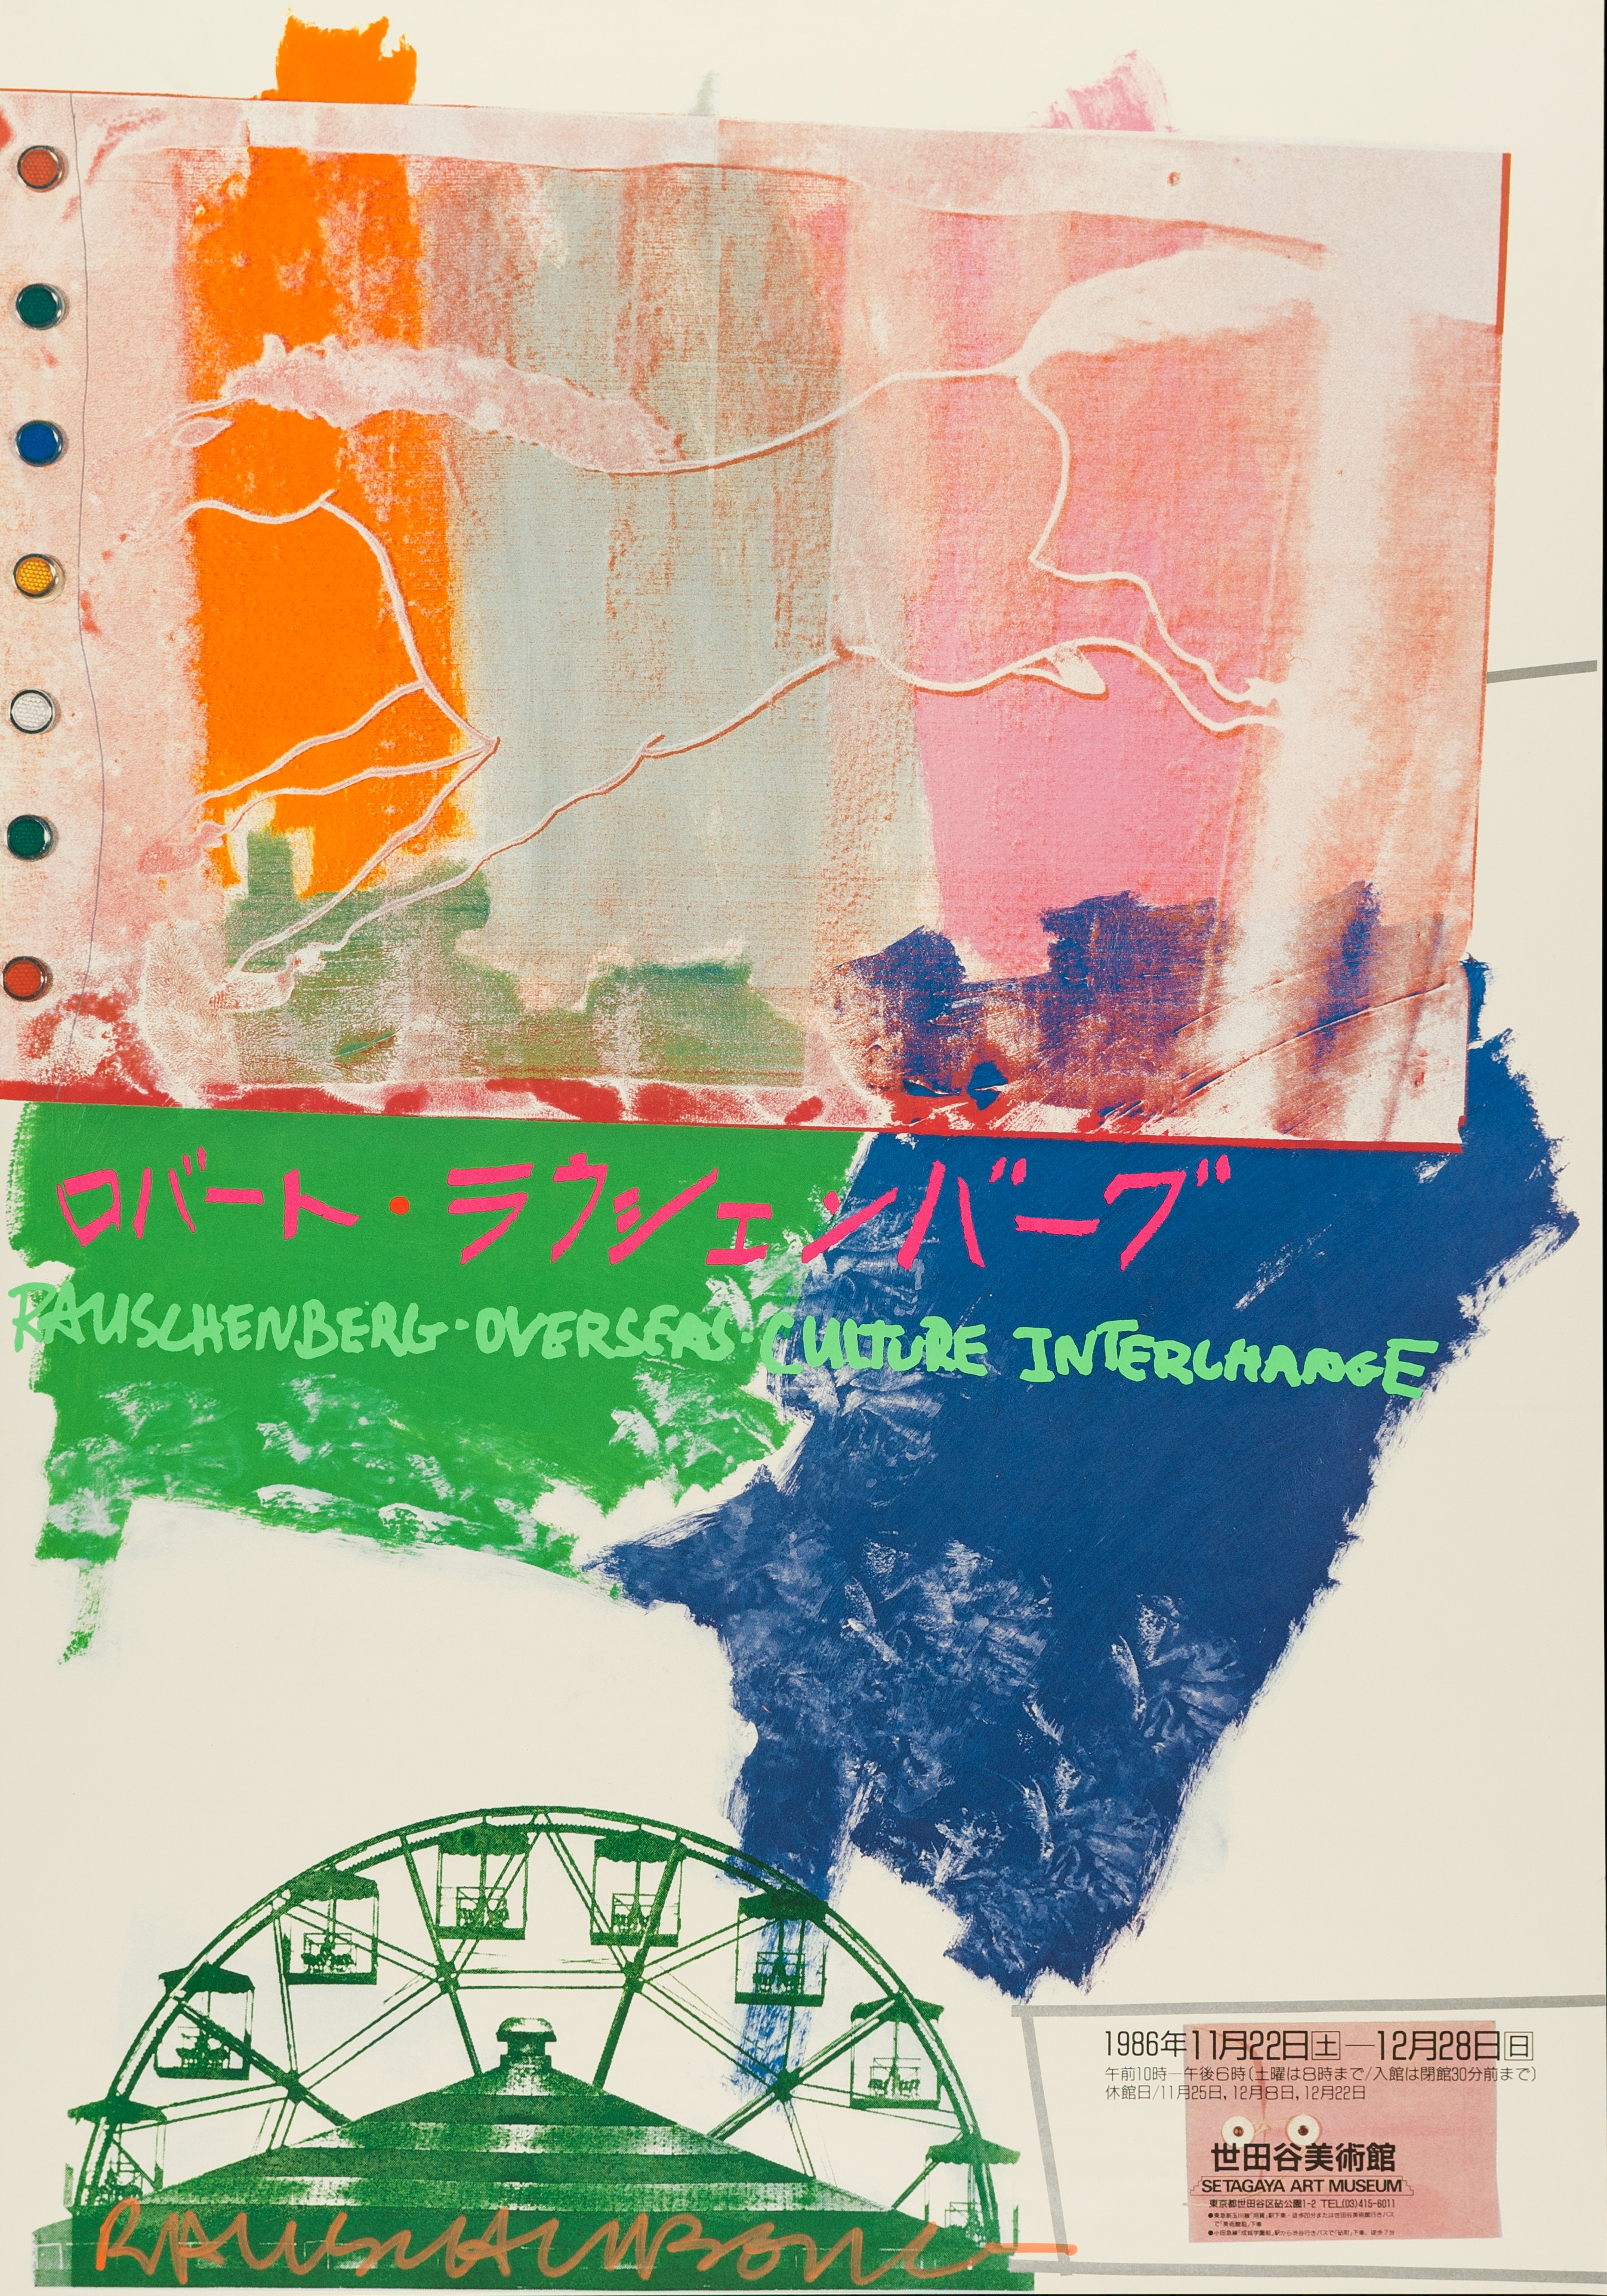 Robert Rauschenberg, Rauschenberg Overseas Culture Interchange, Setagaya Art Museum, Tokyo. Nov-Dec 1986, Offsetdruck, 87,8 x 61,2 cm, © Robert Rauschenberg Foundation / VG Bild-Kunst, Bonn 2017